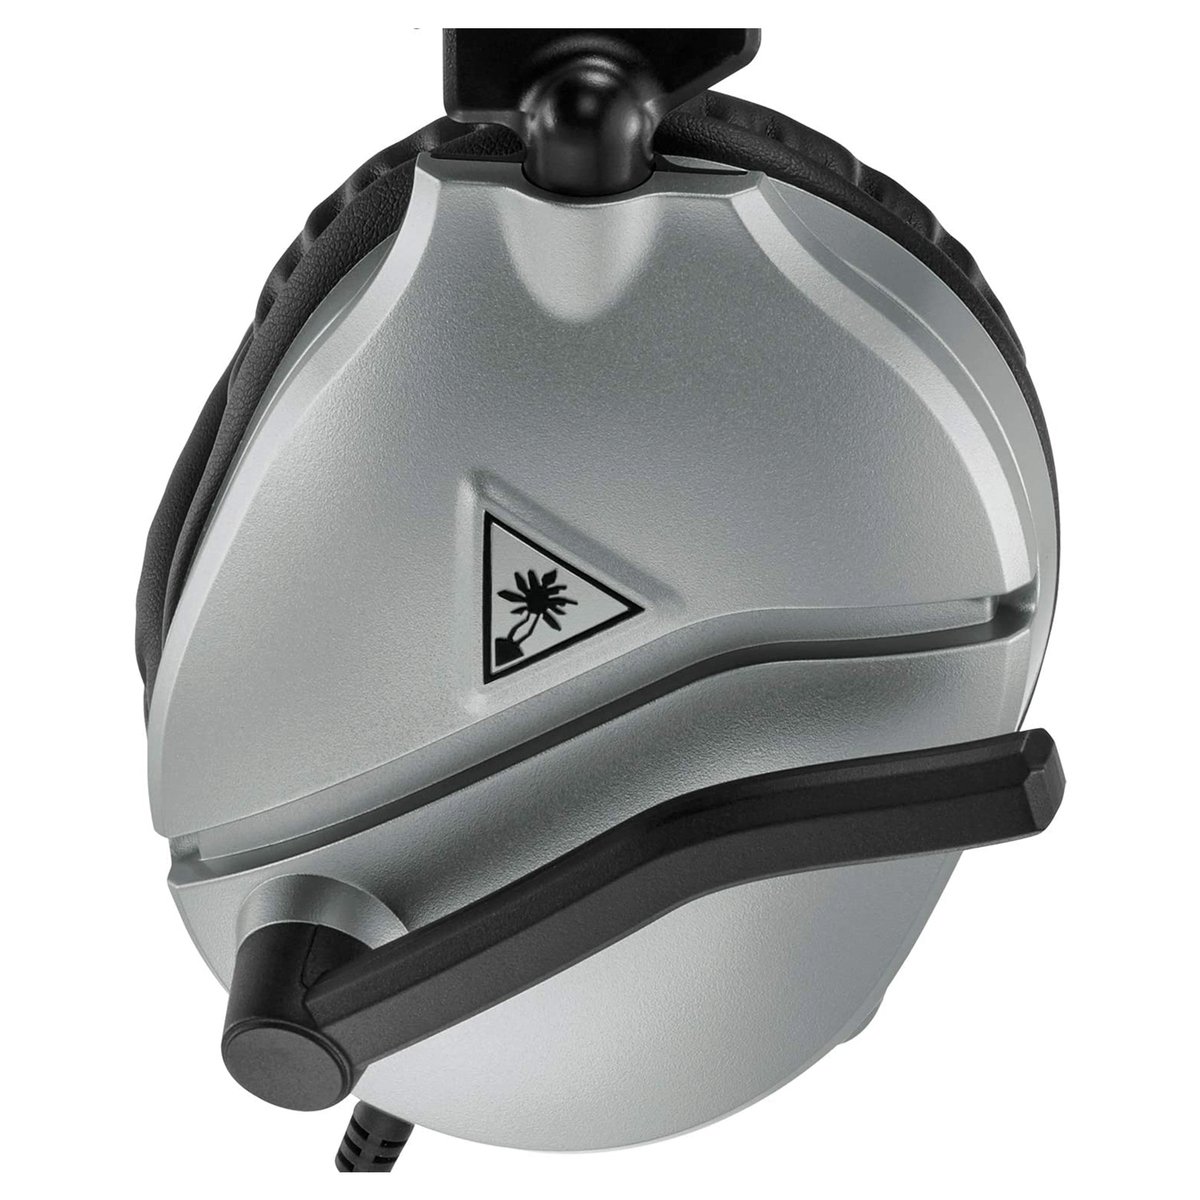 TurtleBeach Headset Ear Force Recon 70 Silver